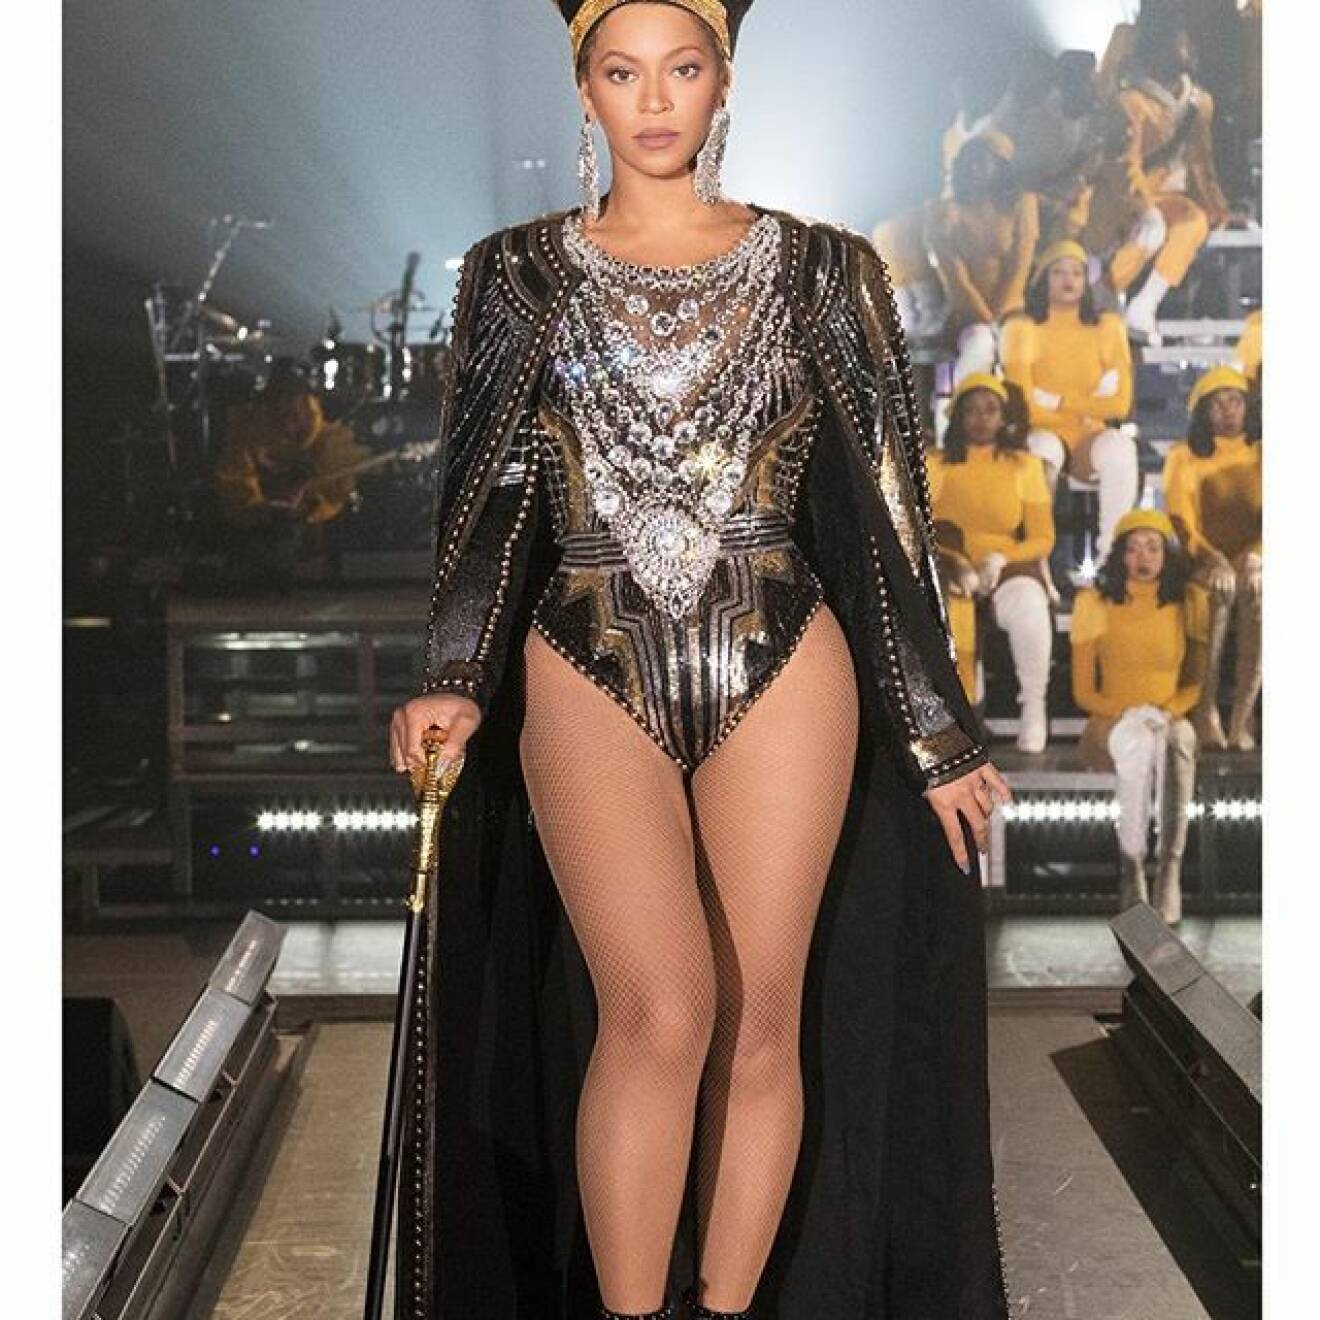 Beyonce på coachella 2018